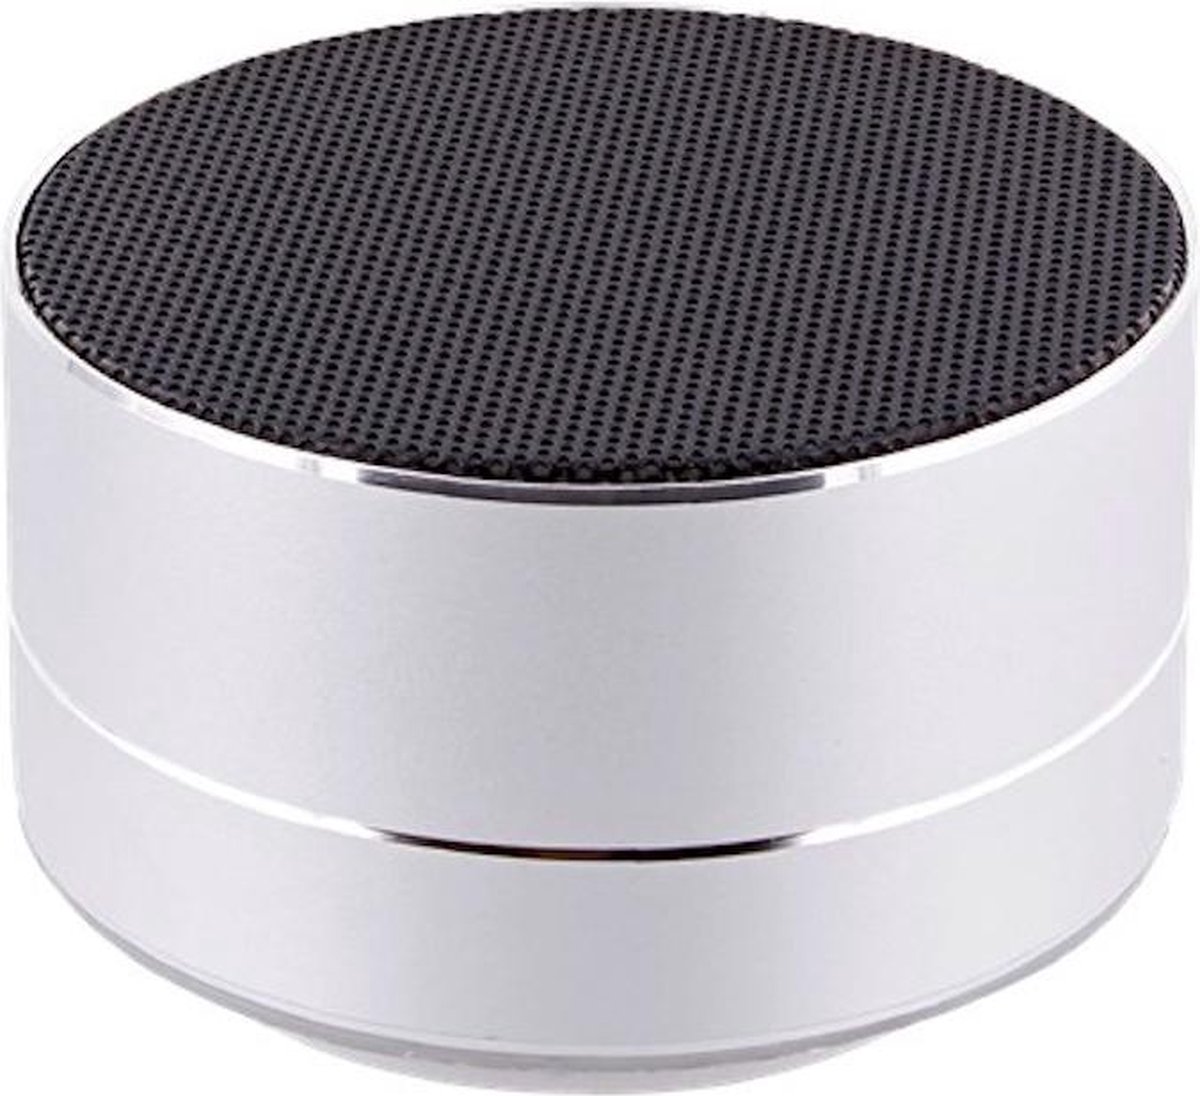 S&C - Bluetooth speaker zilver klein mini draadloze speaker muziek audio